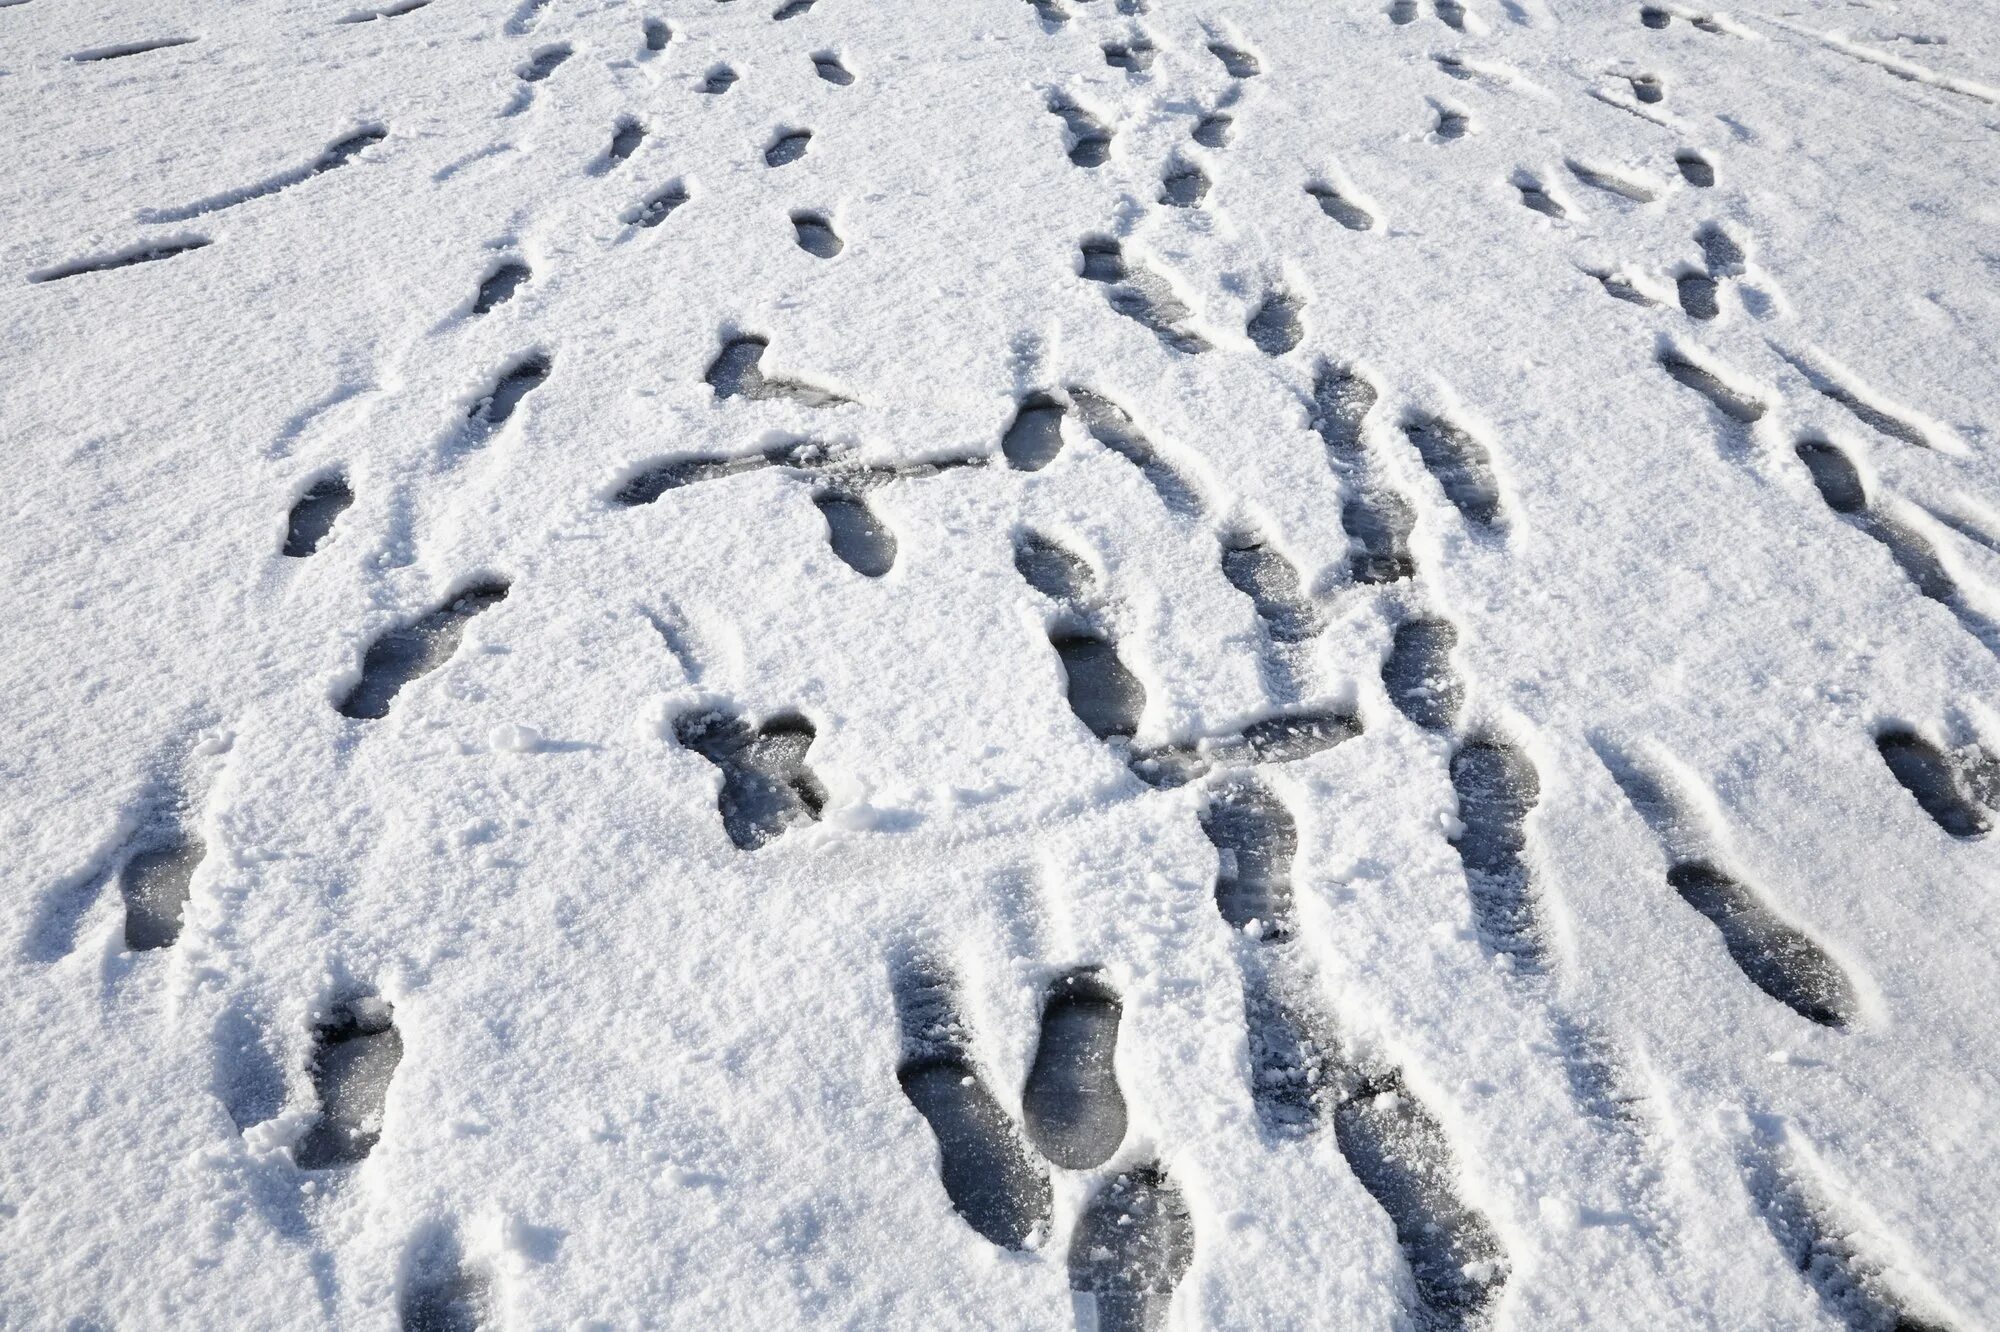 Множество следов на снегу. Следы человека на снегу. Следы на снегу текстура. Детские следы на снегу. След недели будет